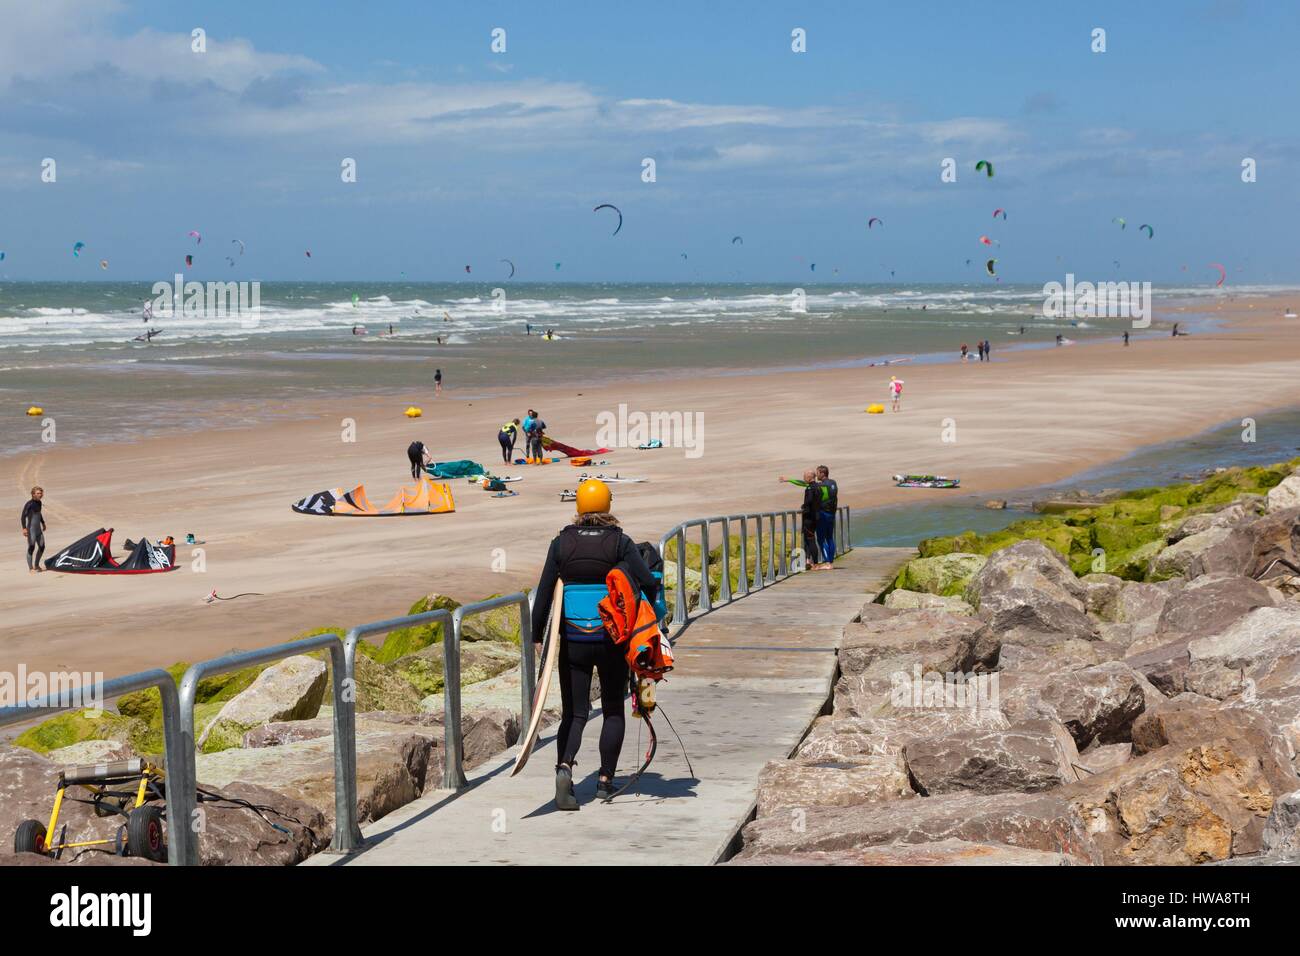 France, Pas de Calais, Wissant, kitesurfing and windsurfing Stock Photo